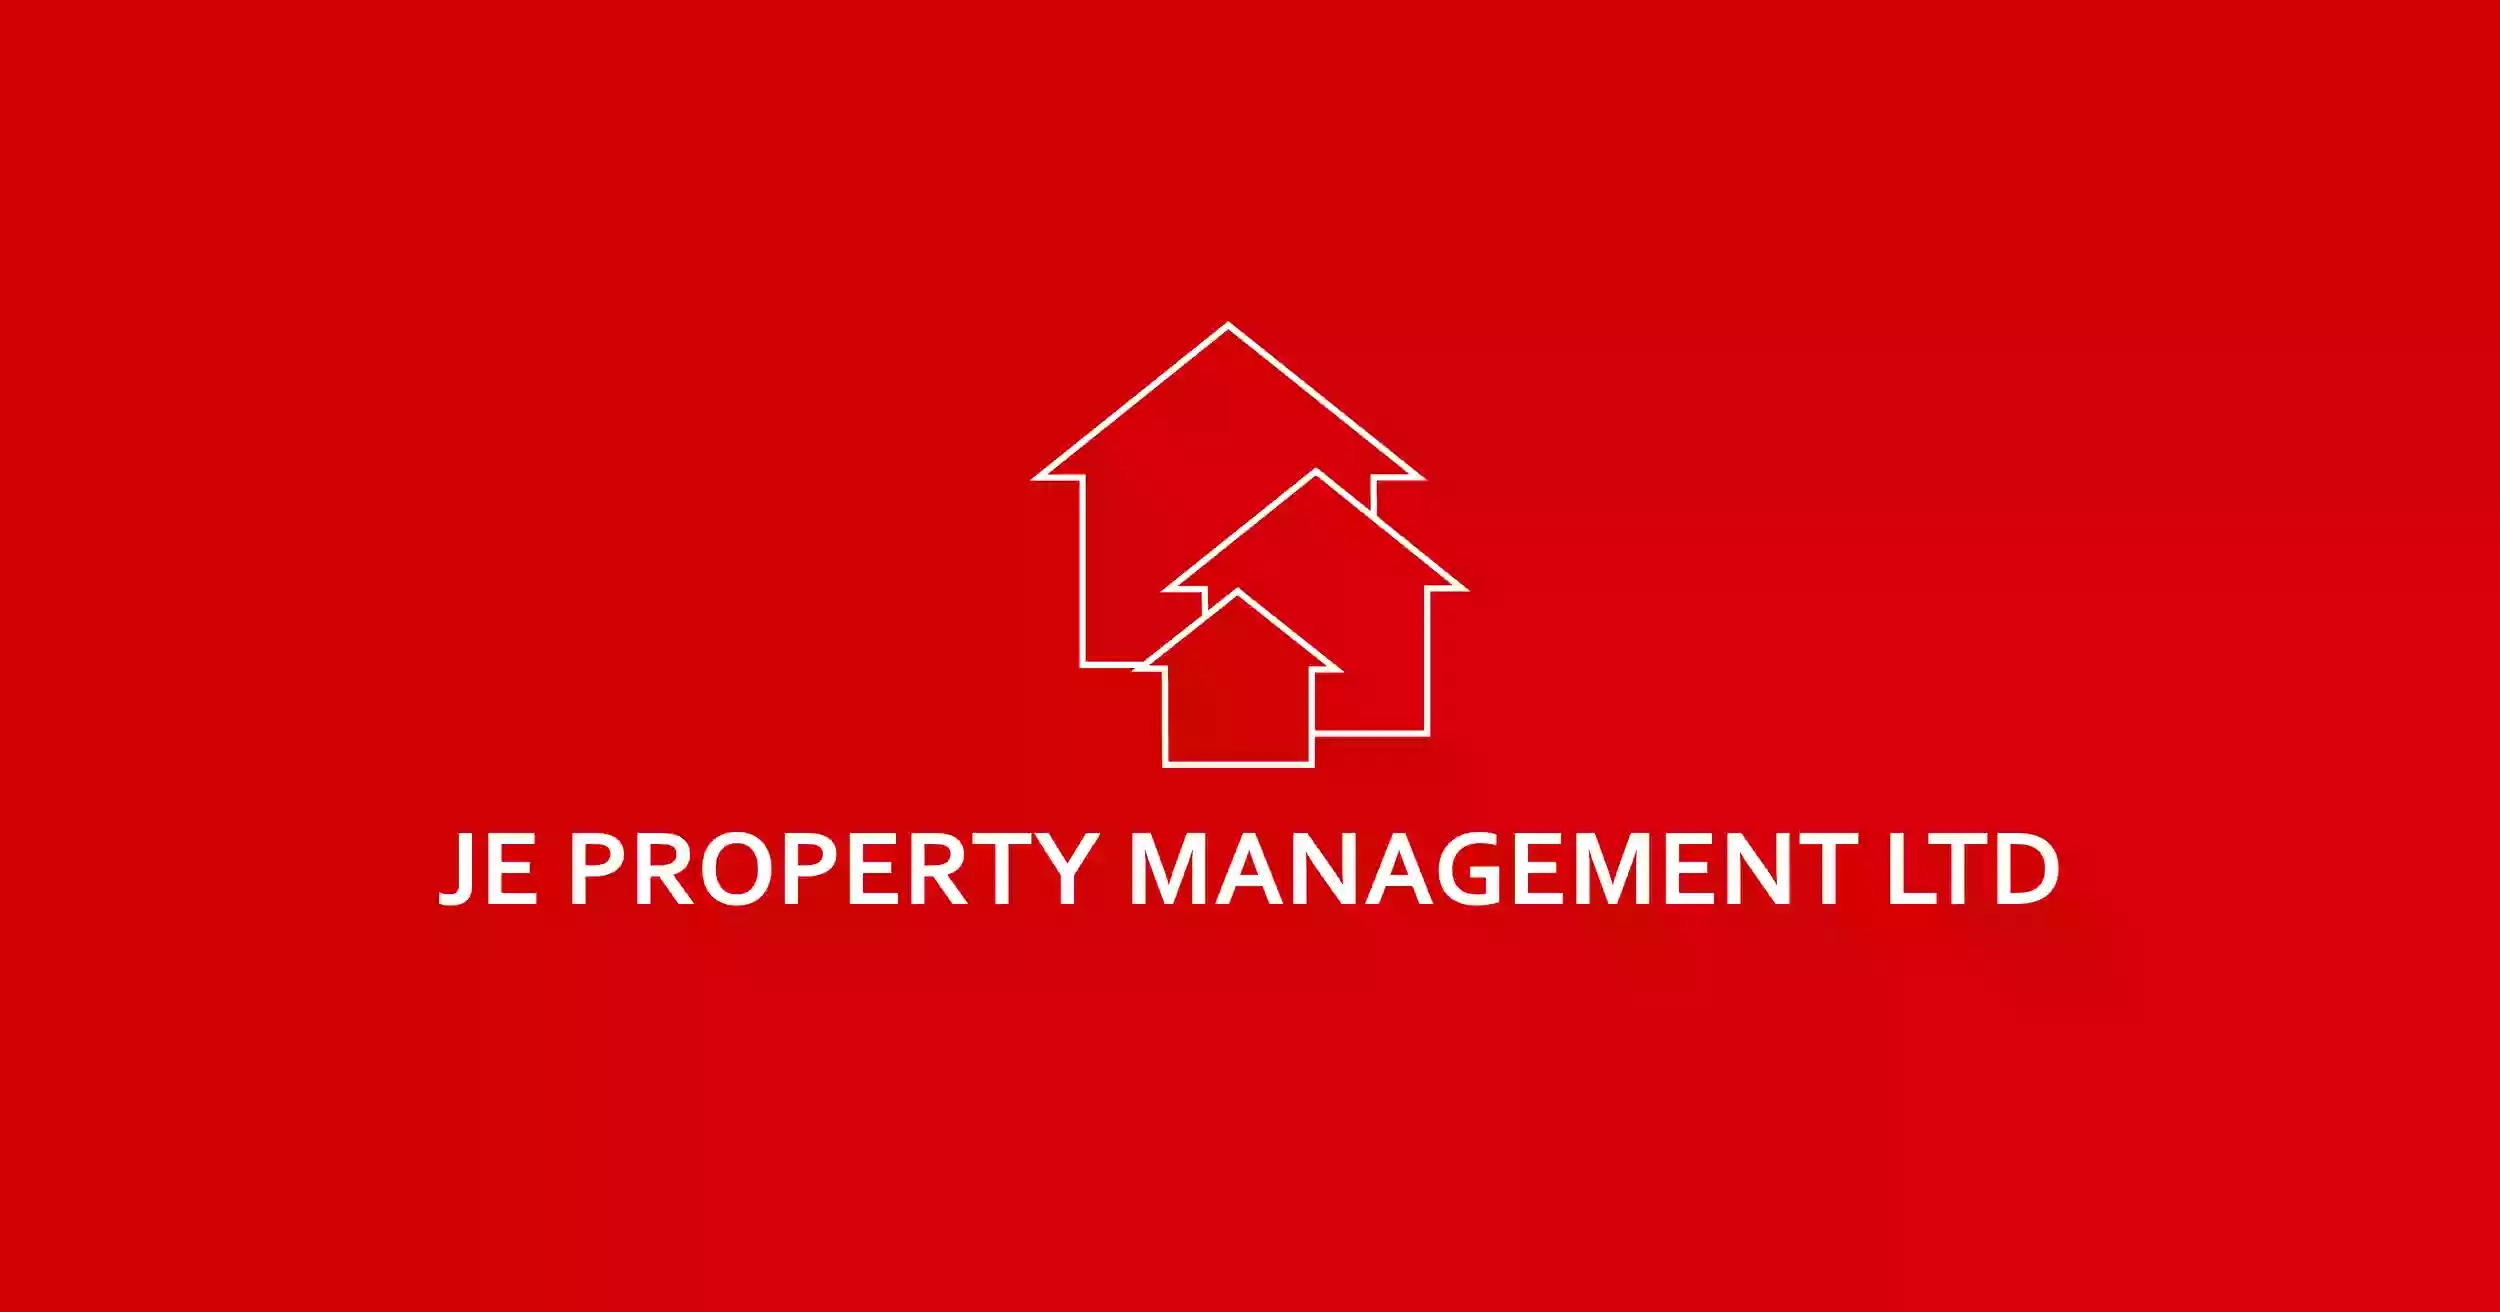 J E Property Management Ltd